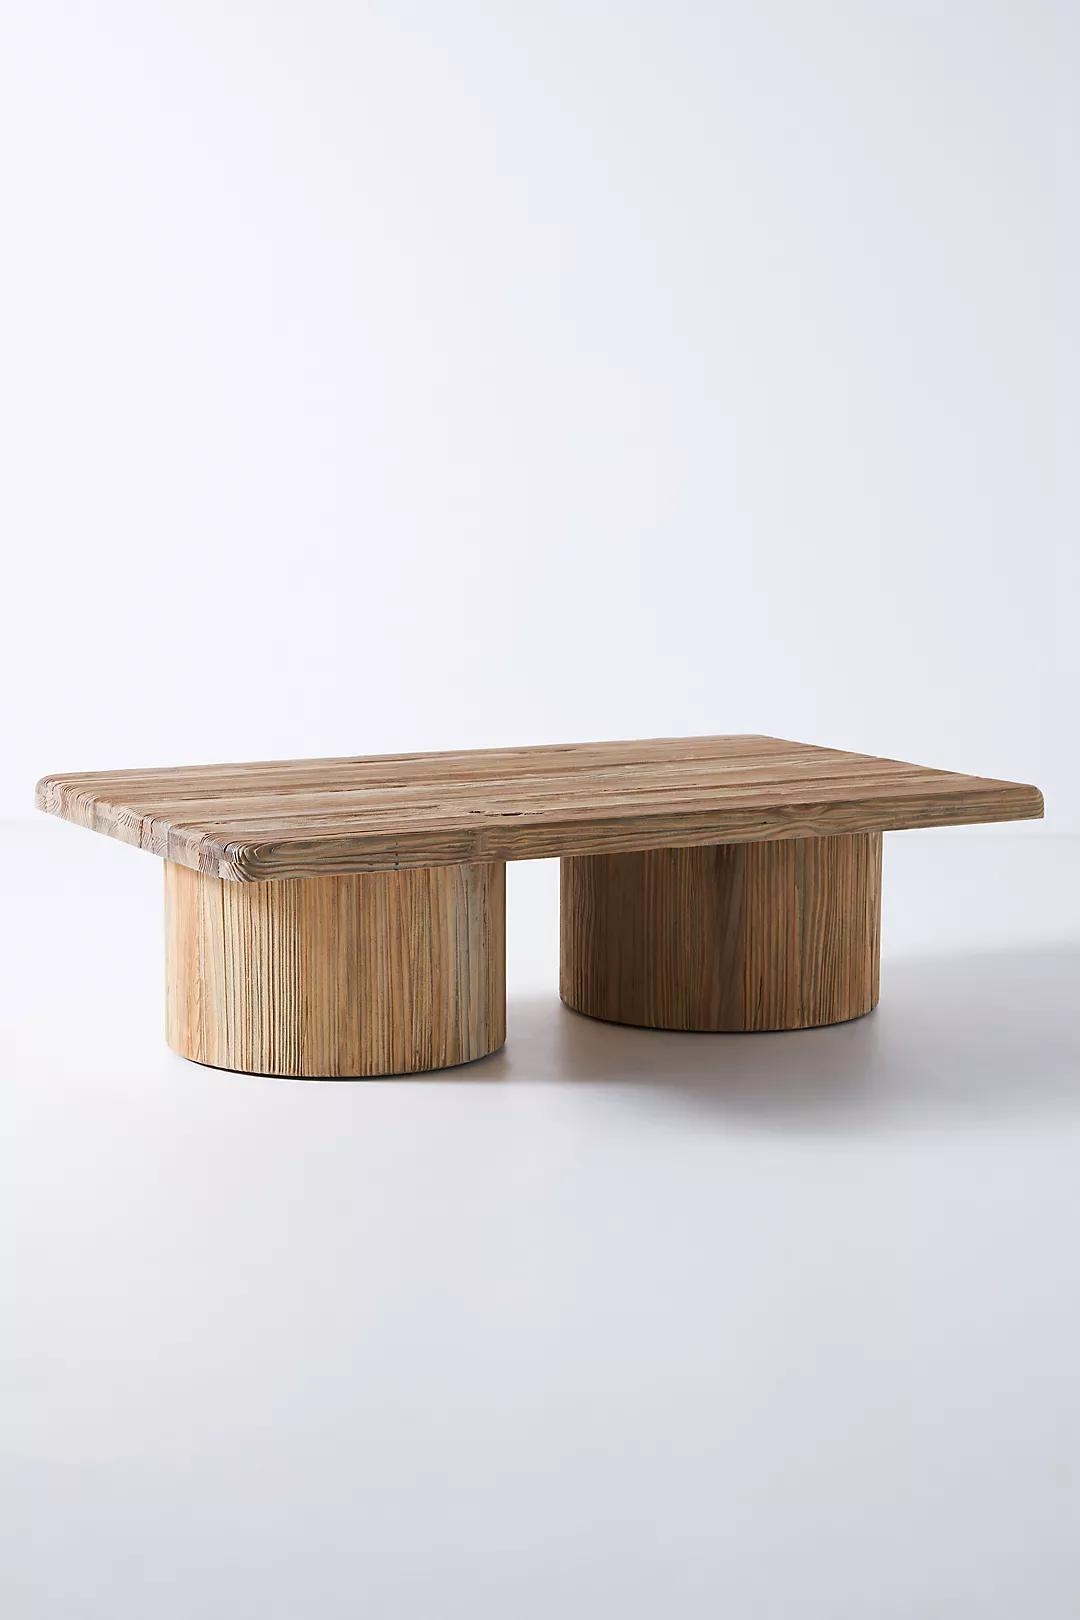 Margate Reclaimed Wood Coffee Table, Beige - Image 2